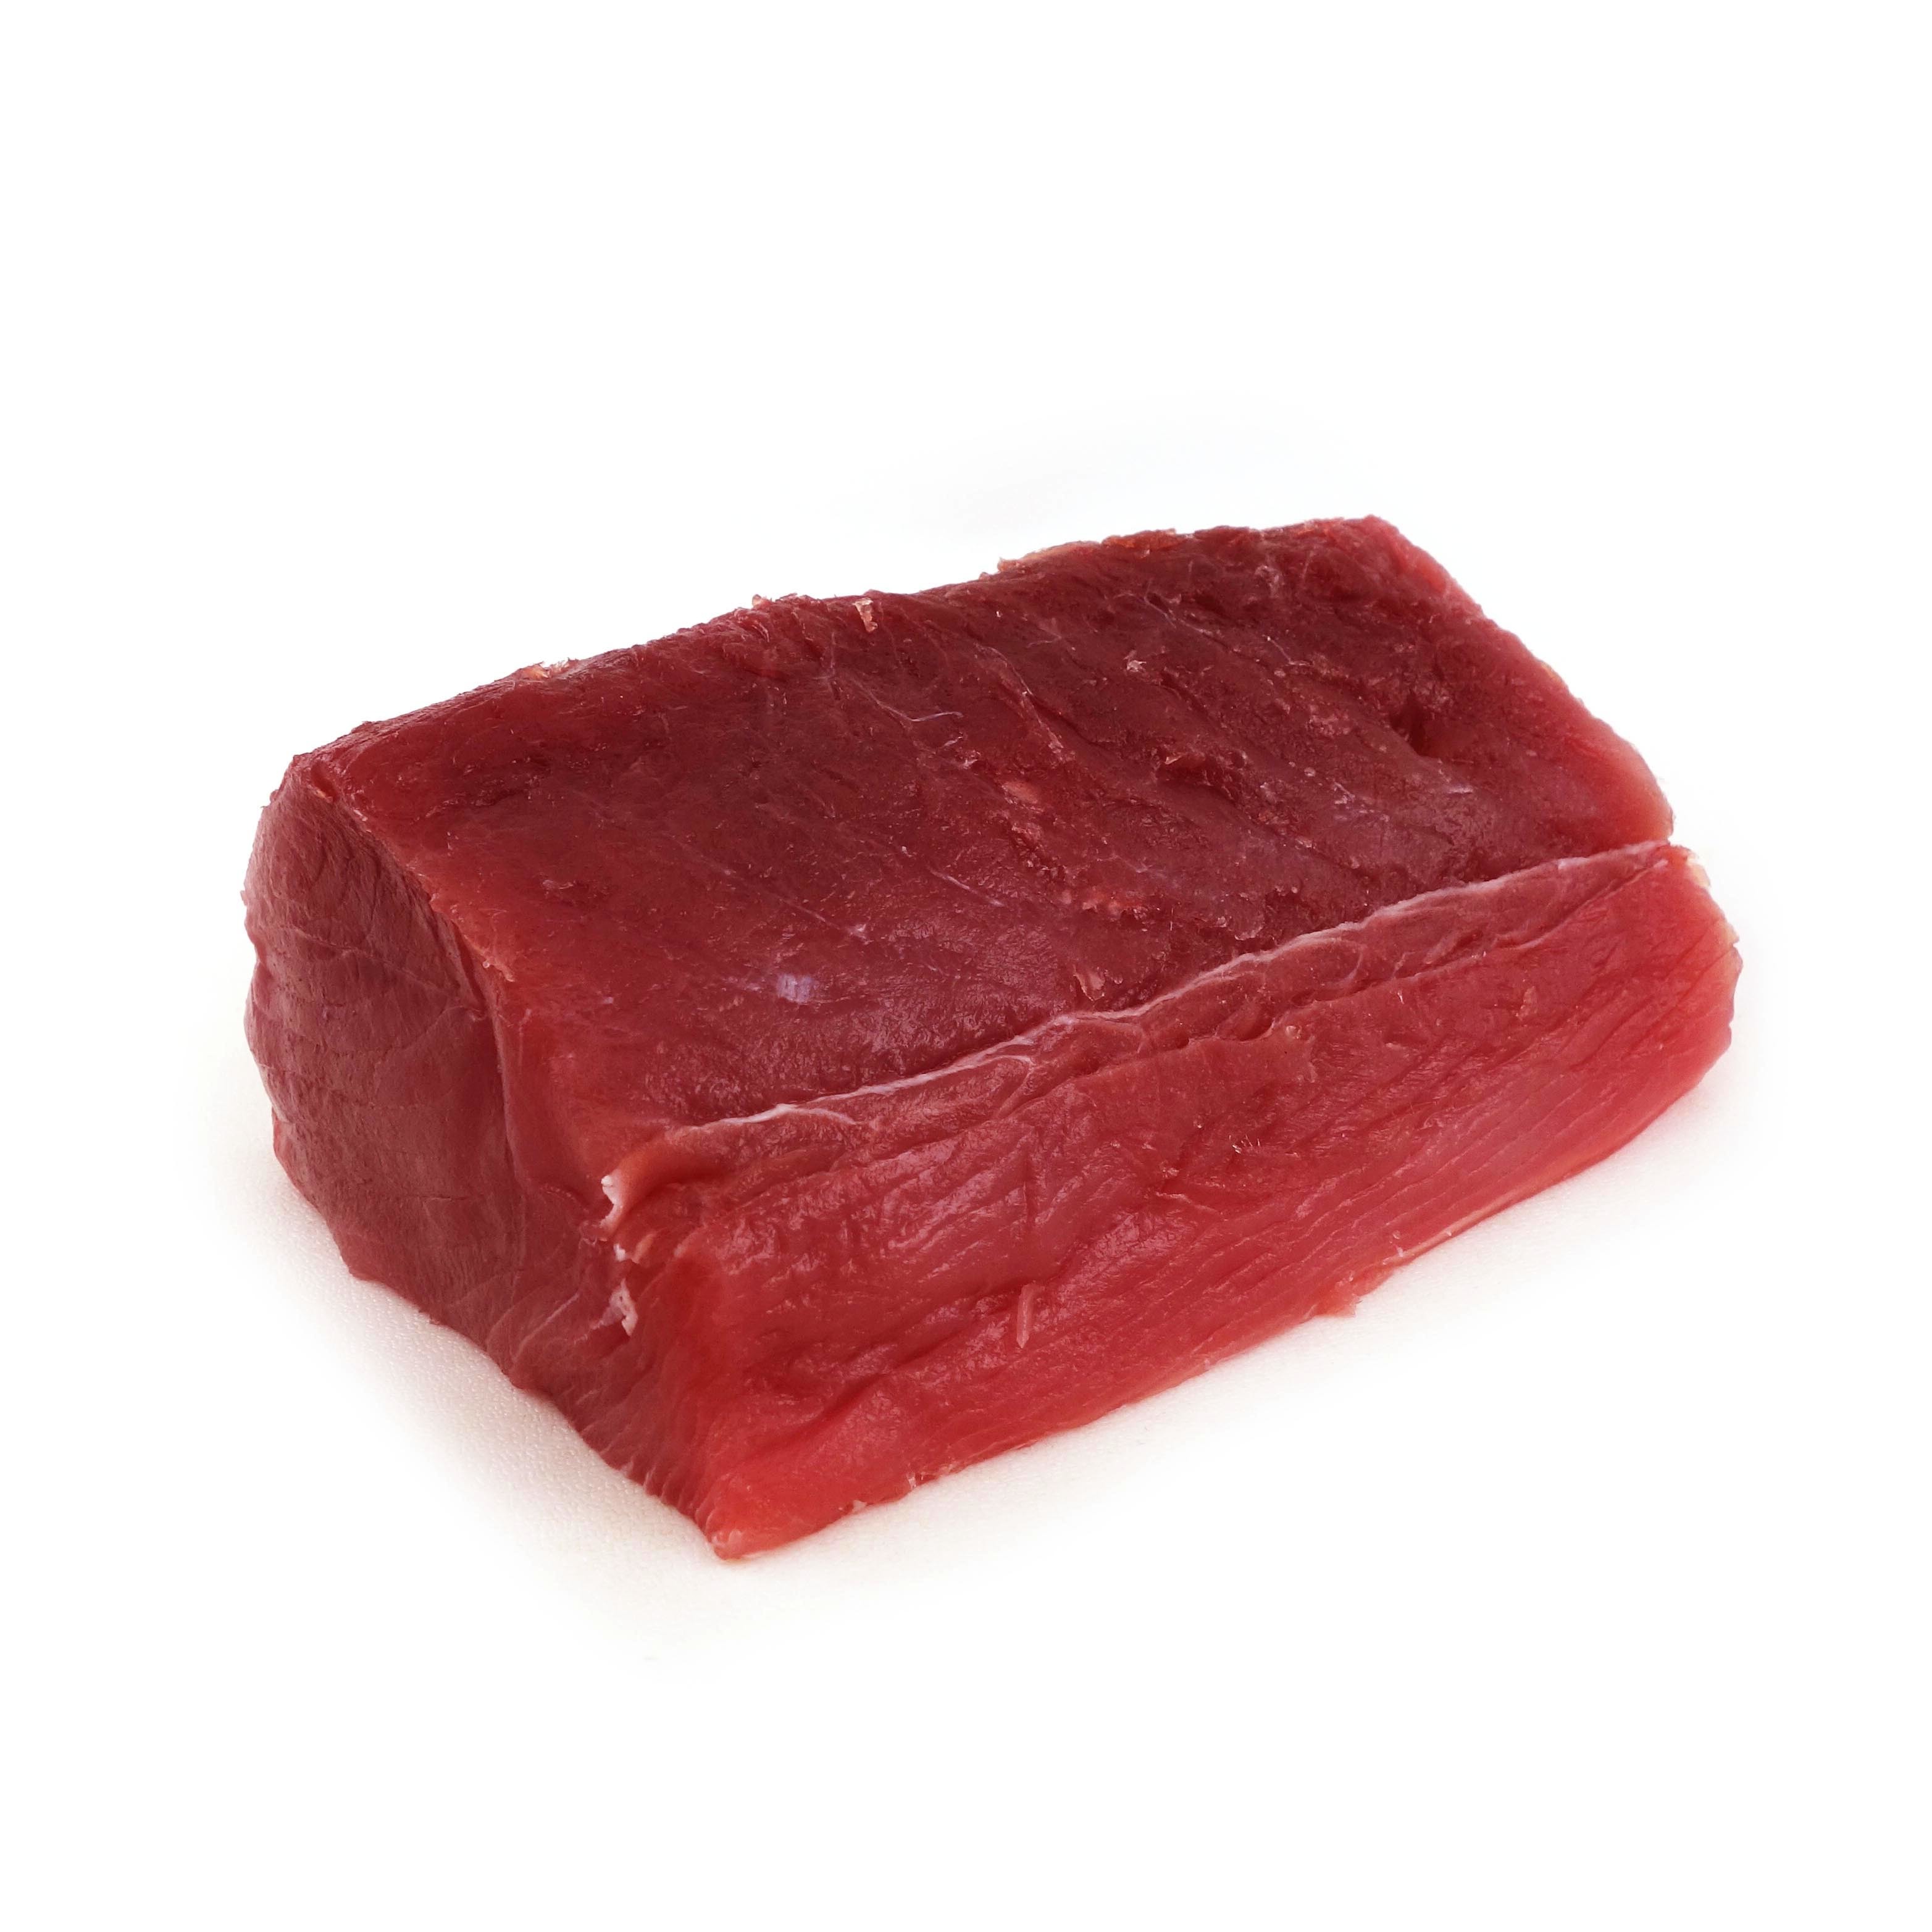 夏威夷黃鰭吞拿魚(Yellowfin Tuna)